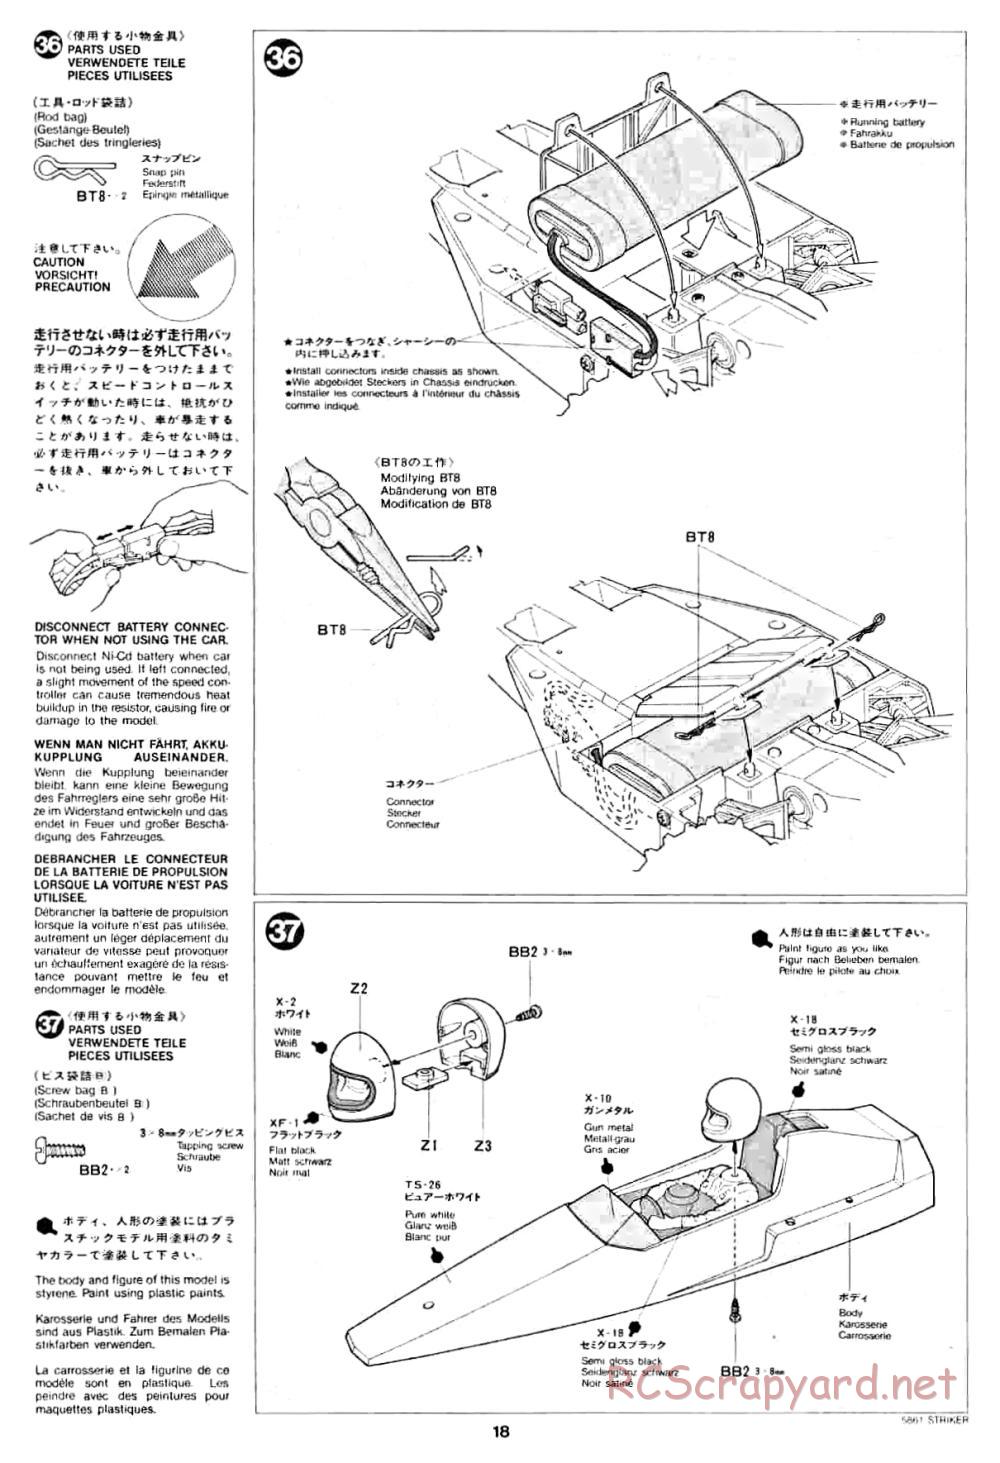 Tamiya - Striker - 58061 - Manual - Page 18